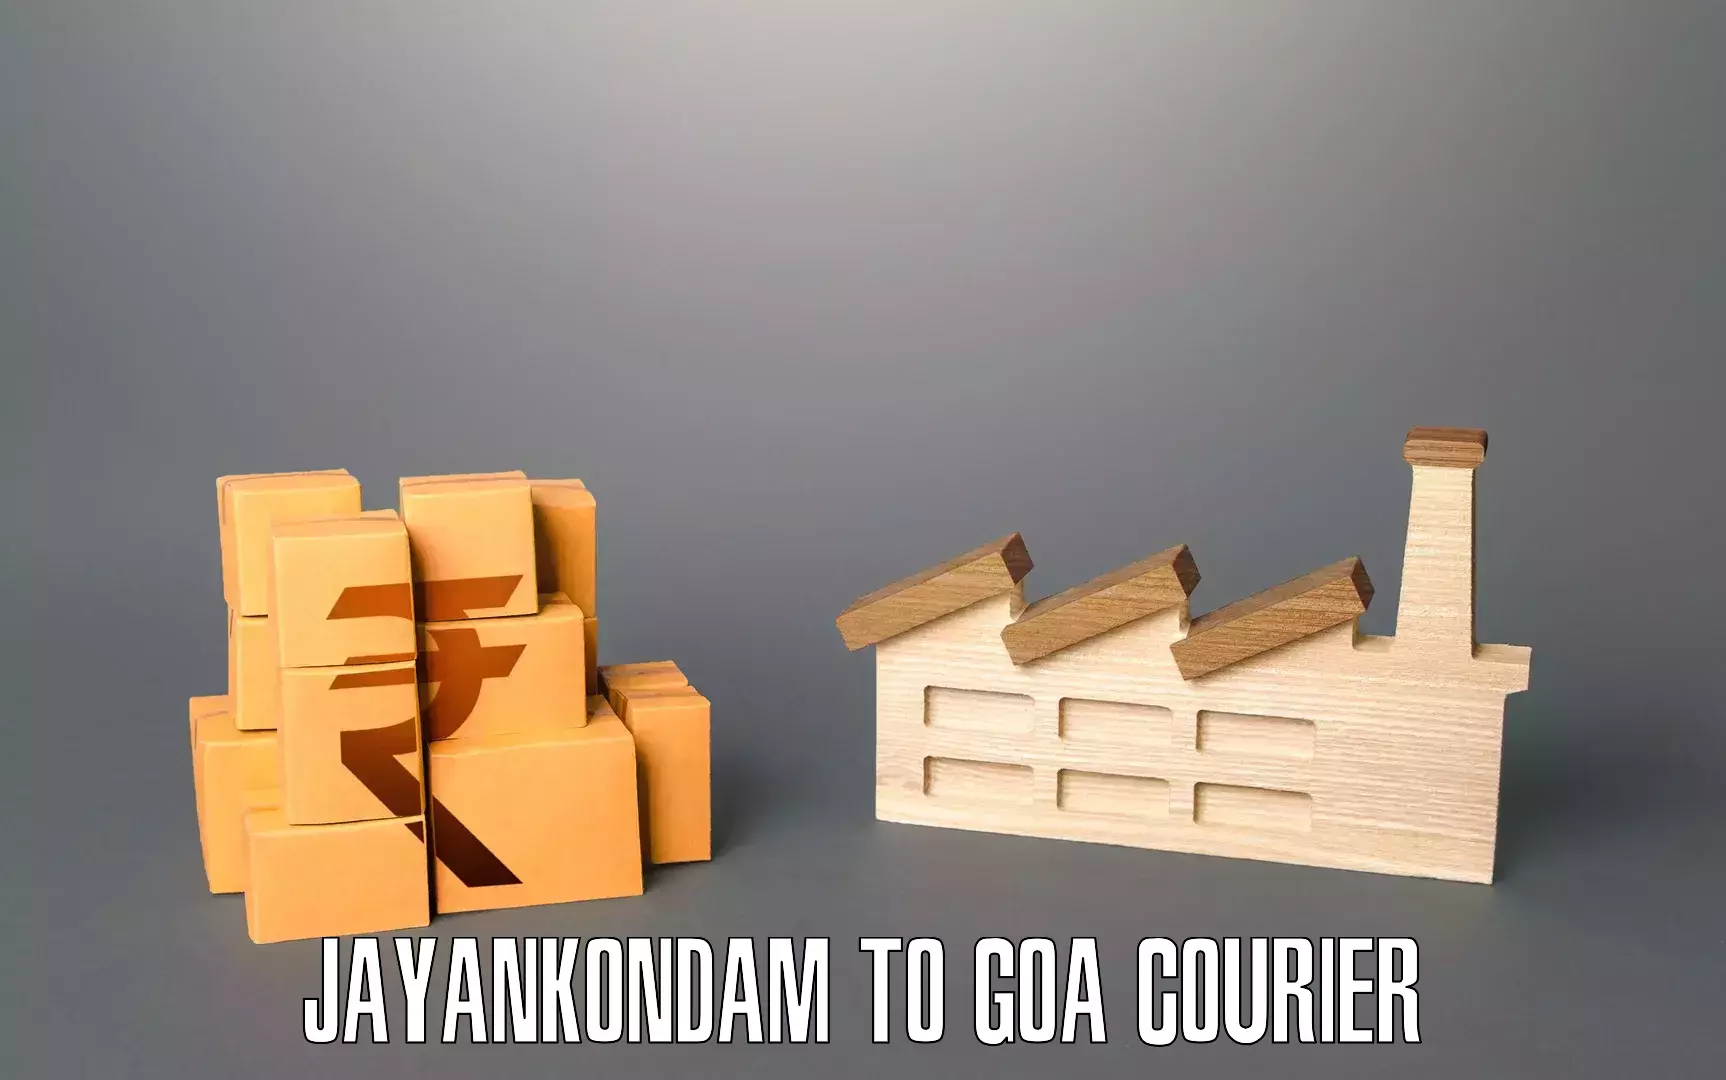 Quick household relocation Jayankondam to Goa